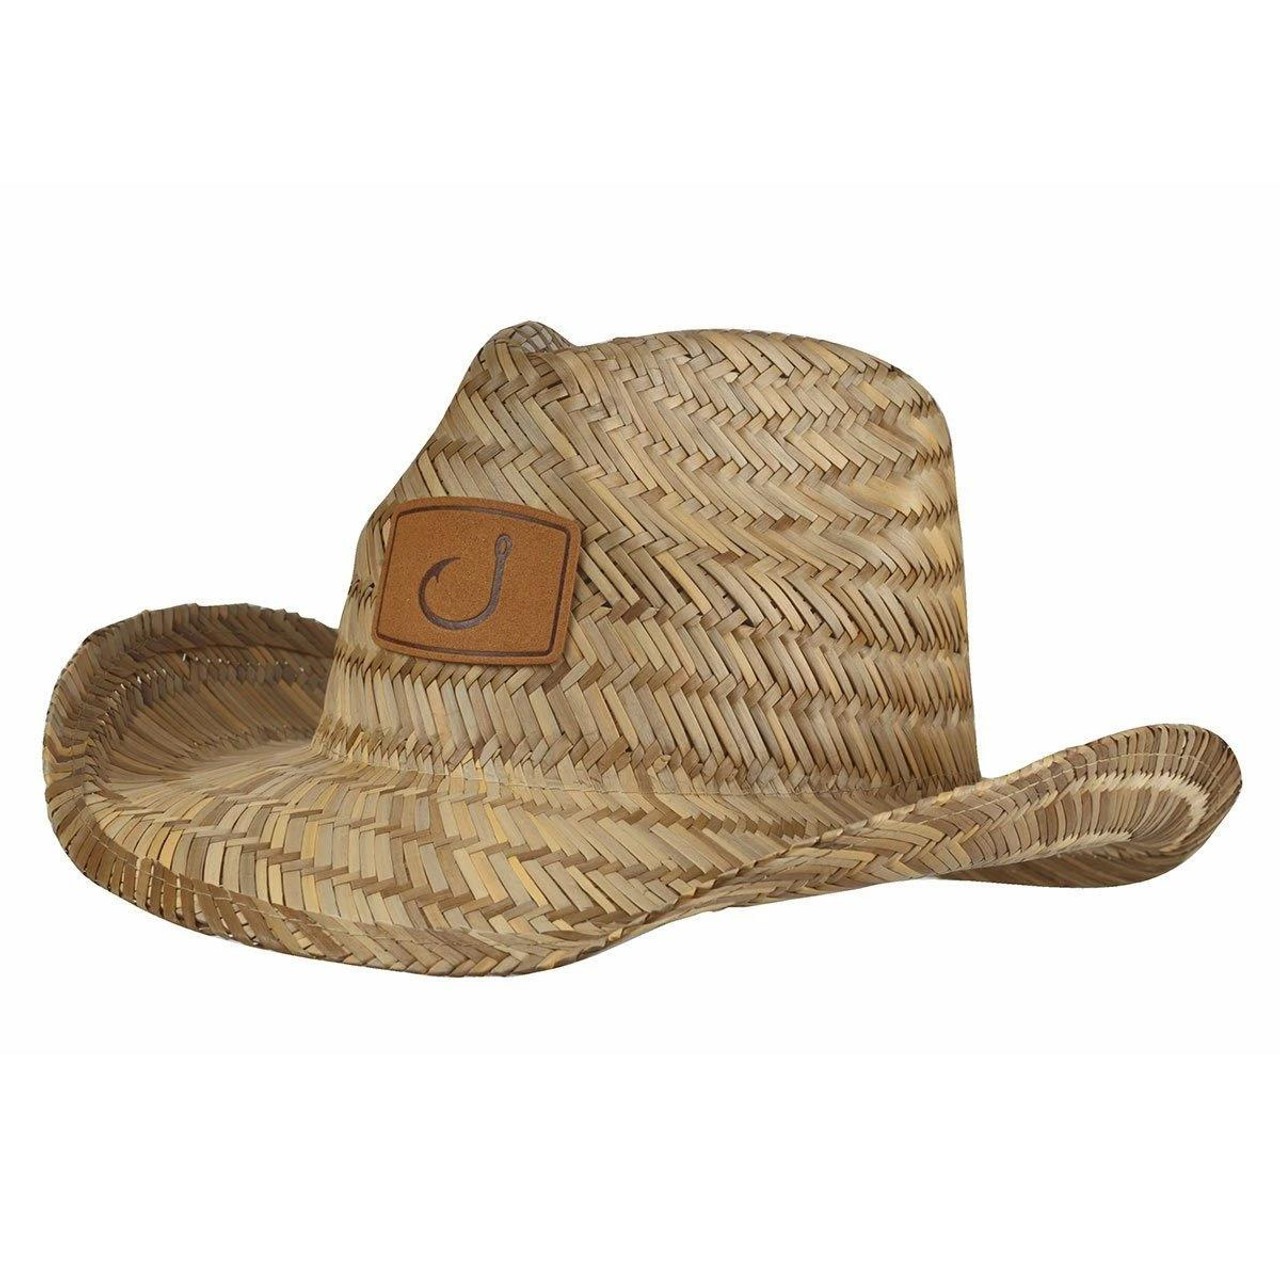 Avid Southern Straw Hat